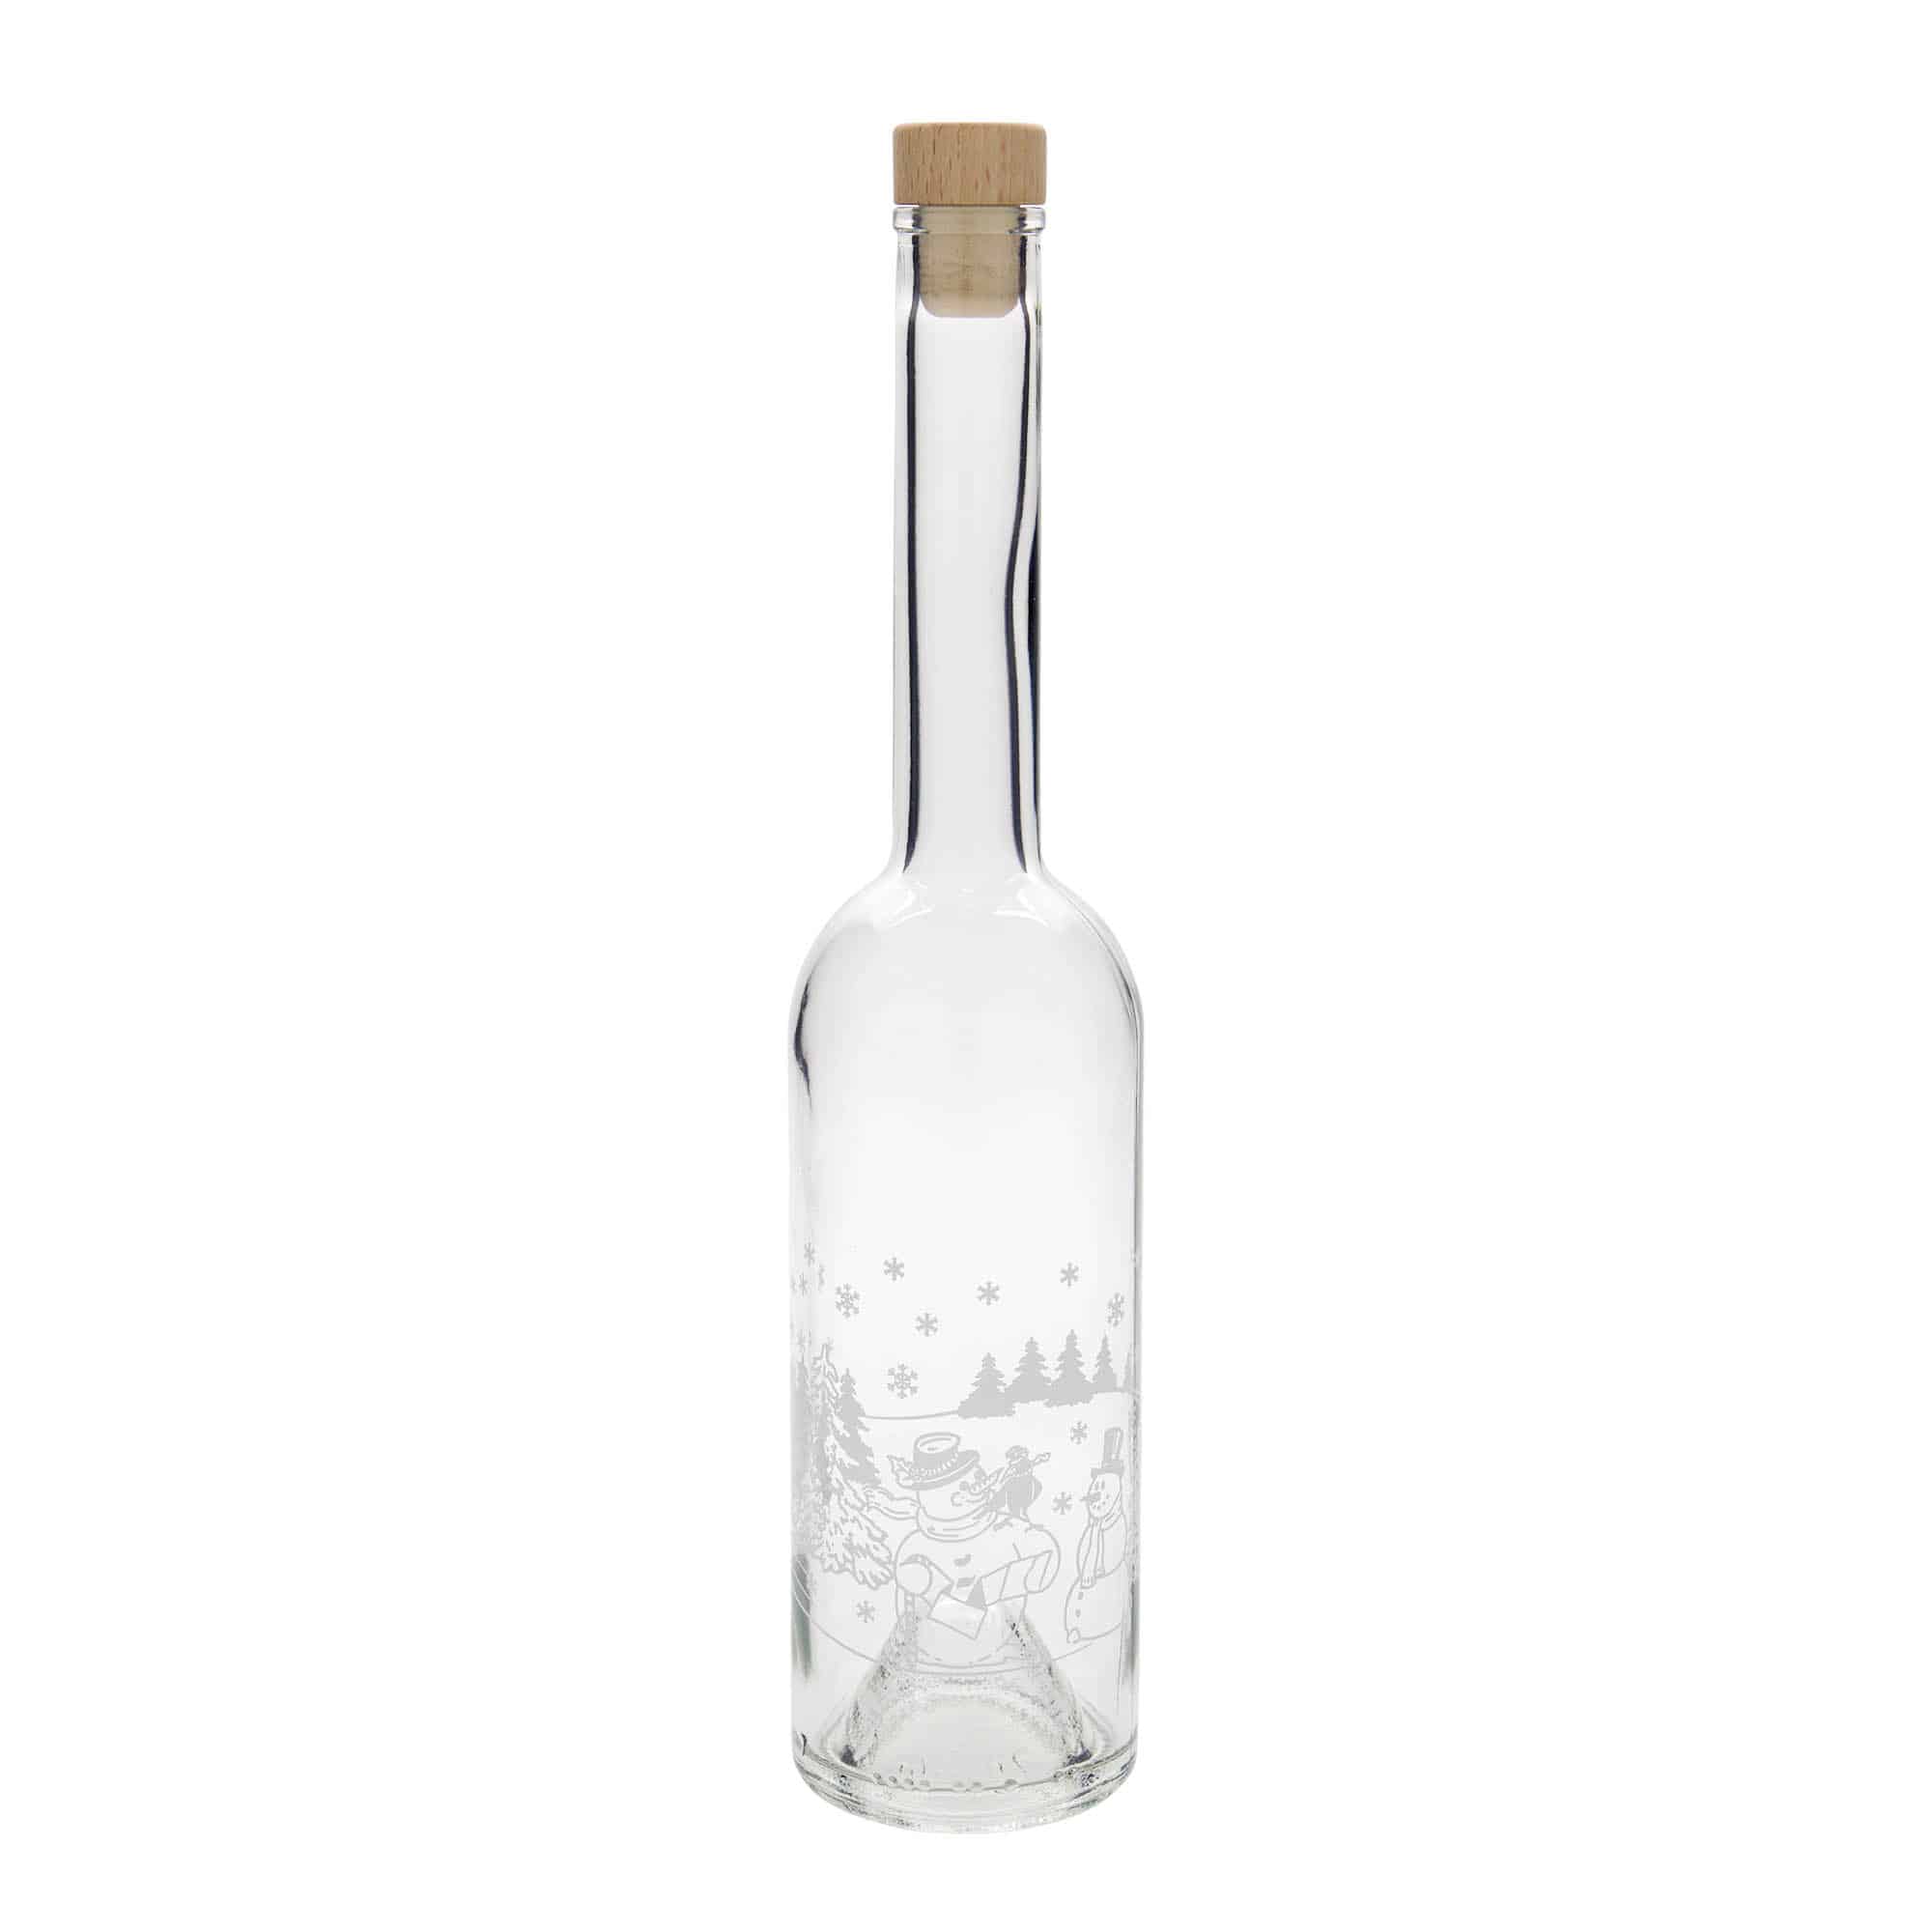 500 ml glass bottle 'Opera', print: snowman bottle, closure: cork